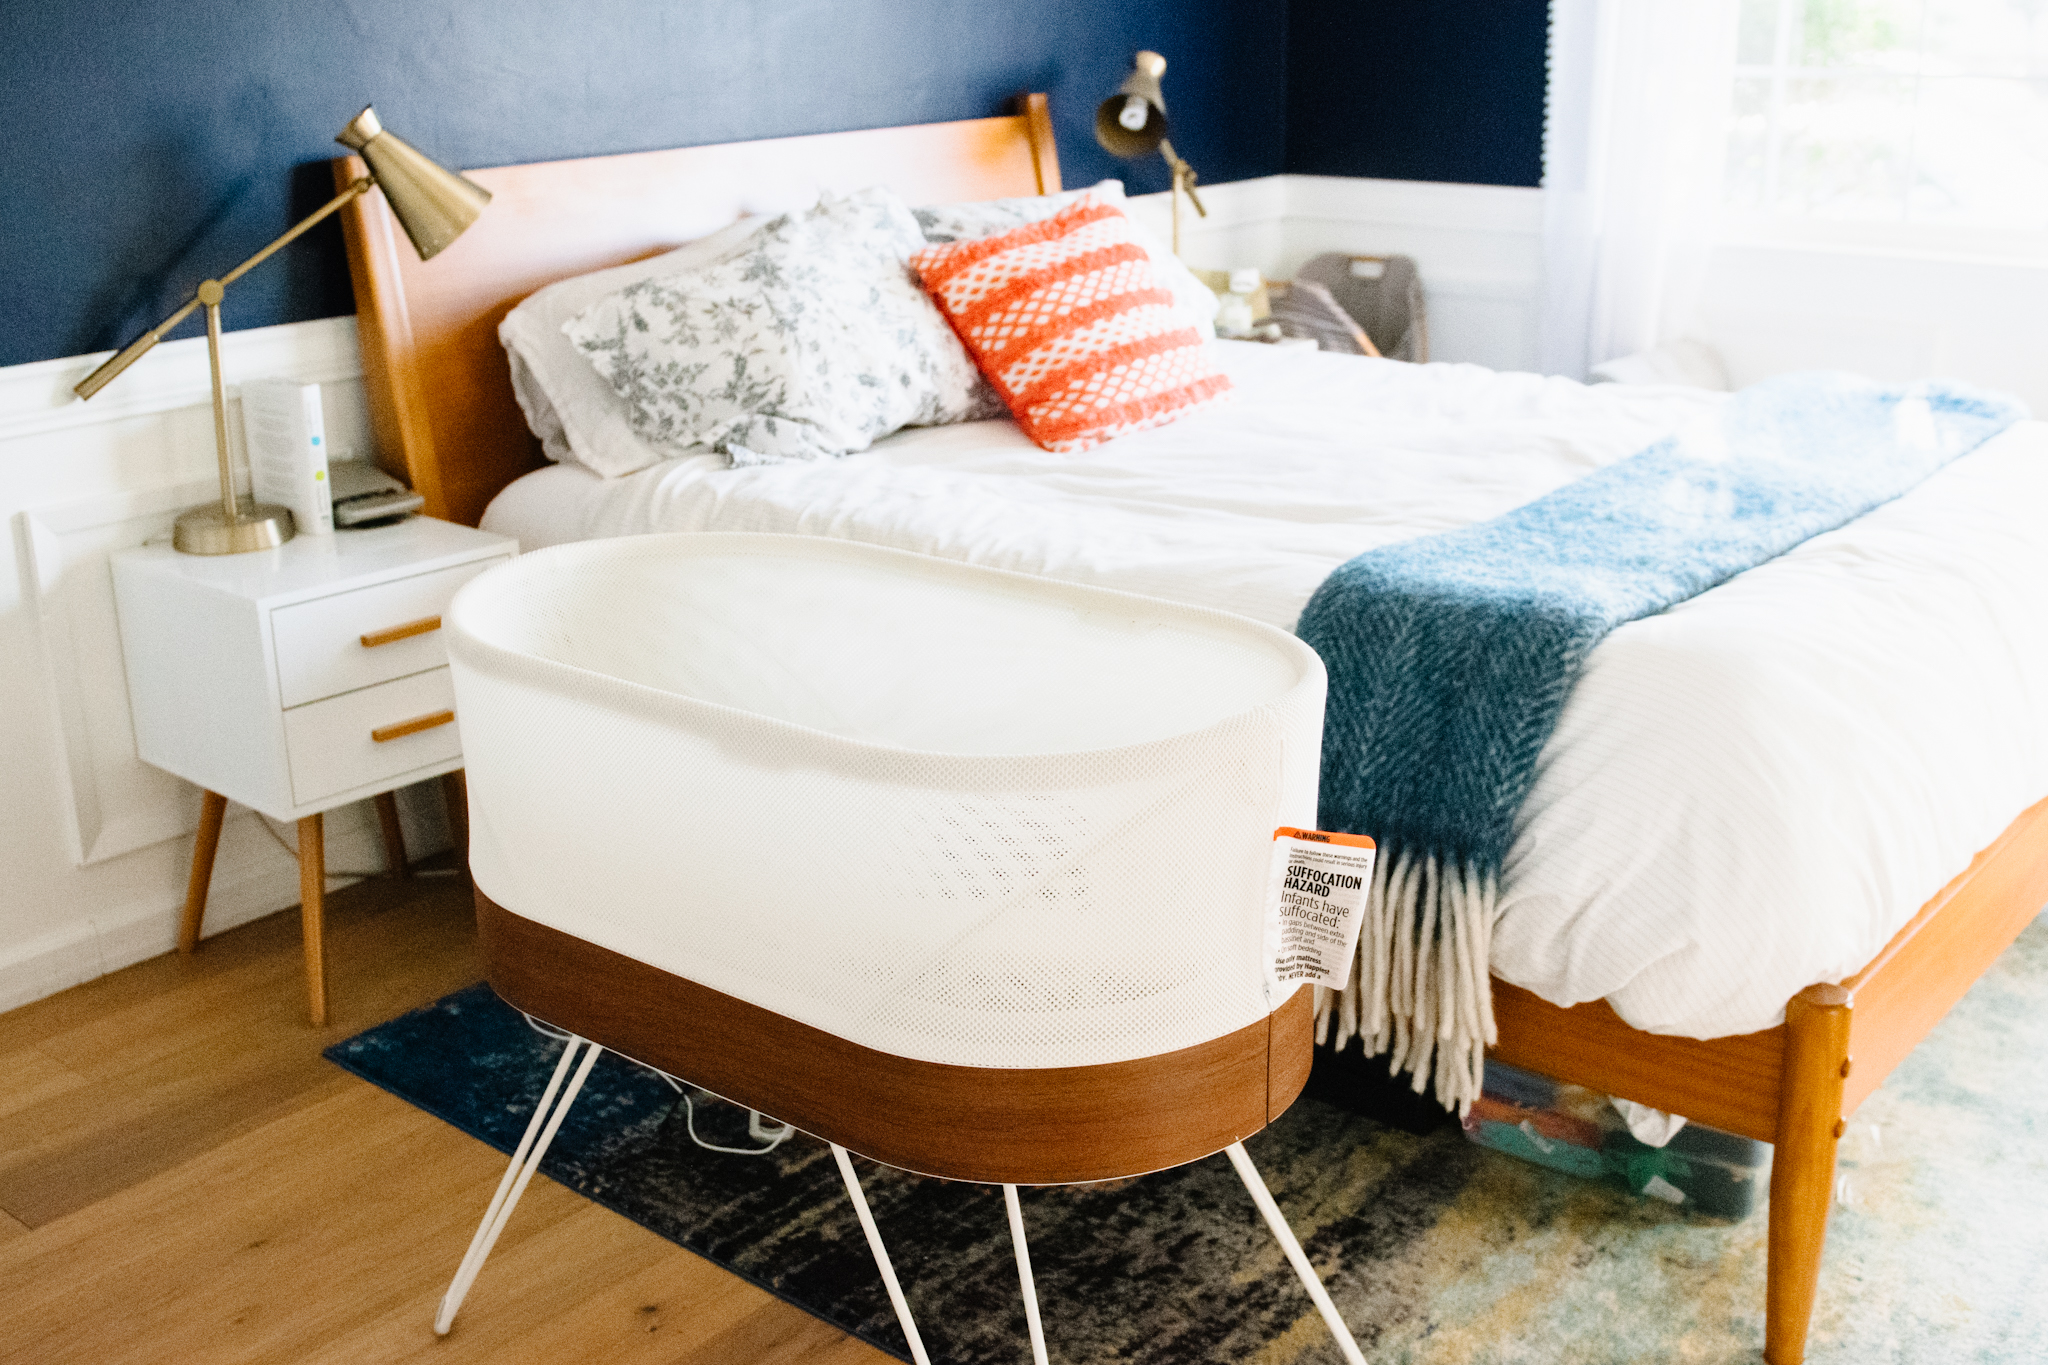 snoo bassinet in master bedroom, snoo pros and cons